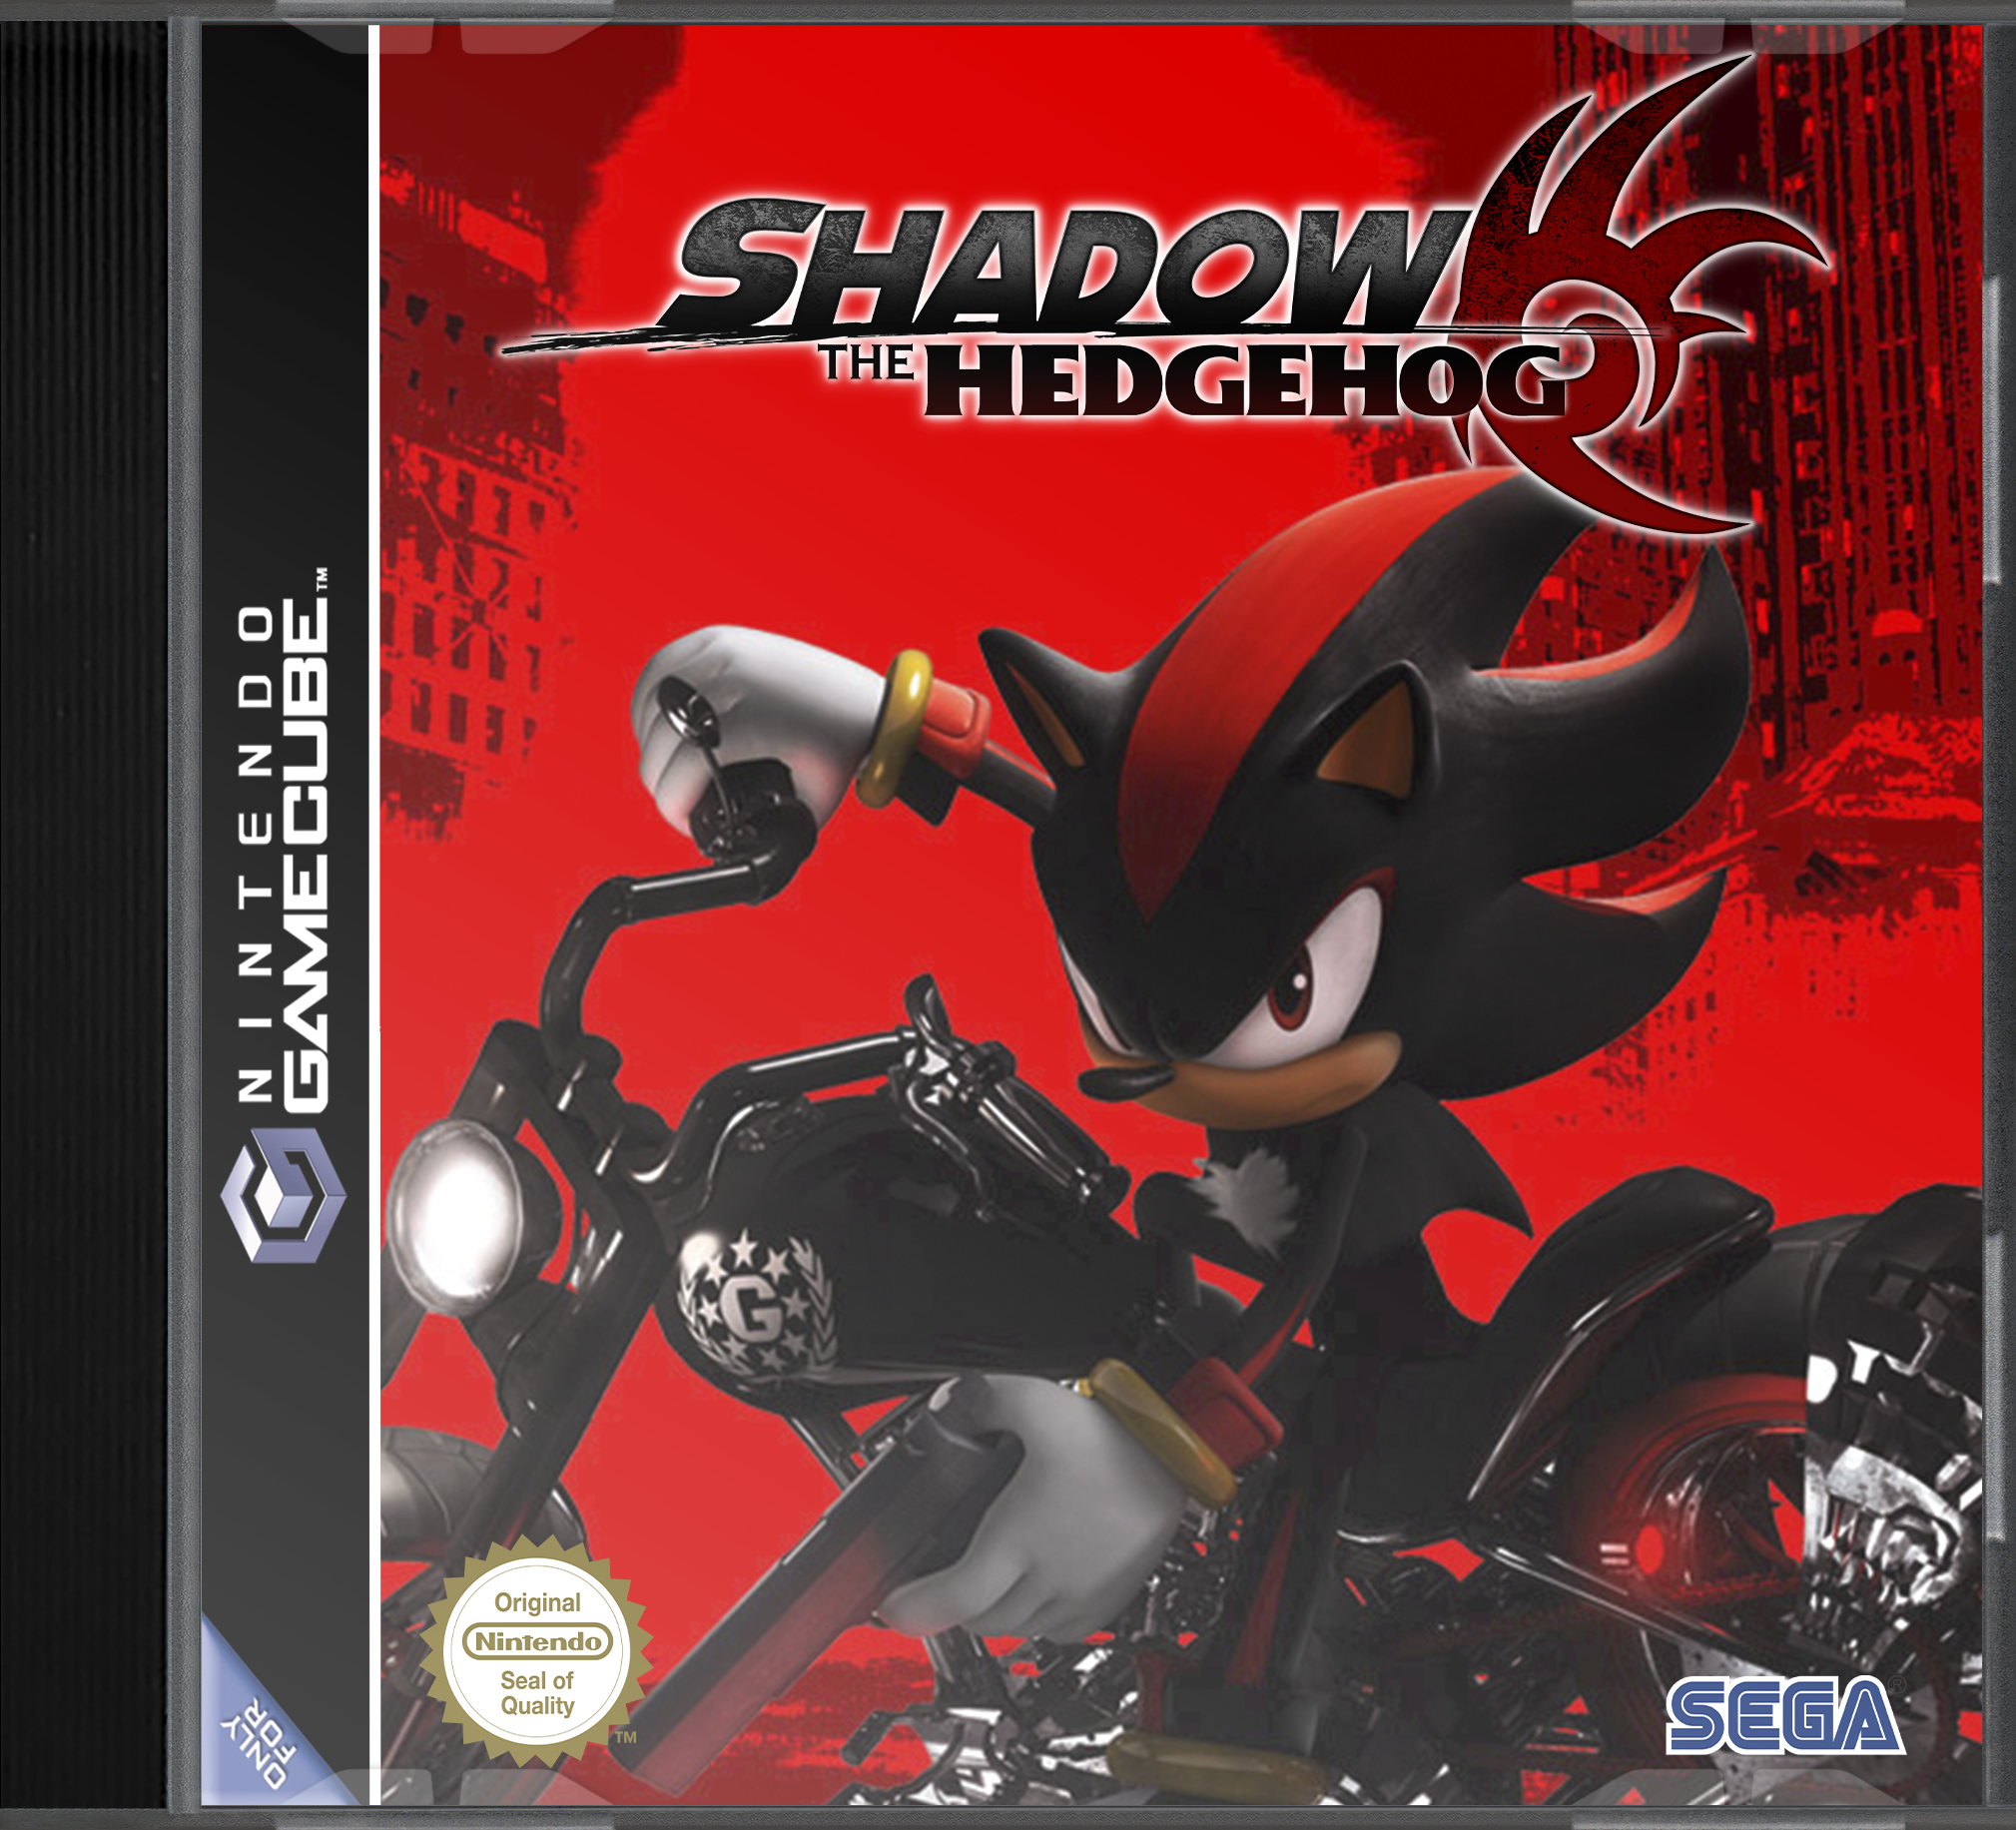 Shadow the Hedgehog Game Boy Advance Box Art Cover by hunter1993